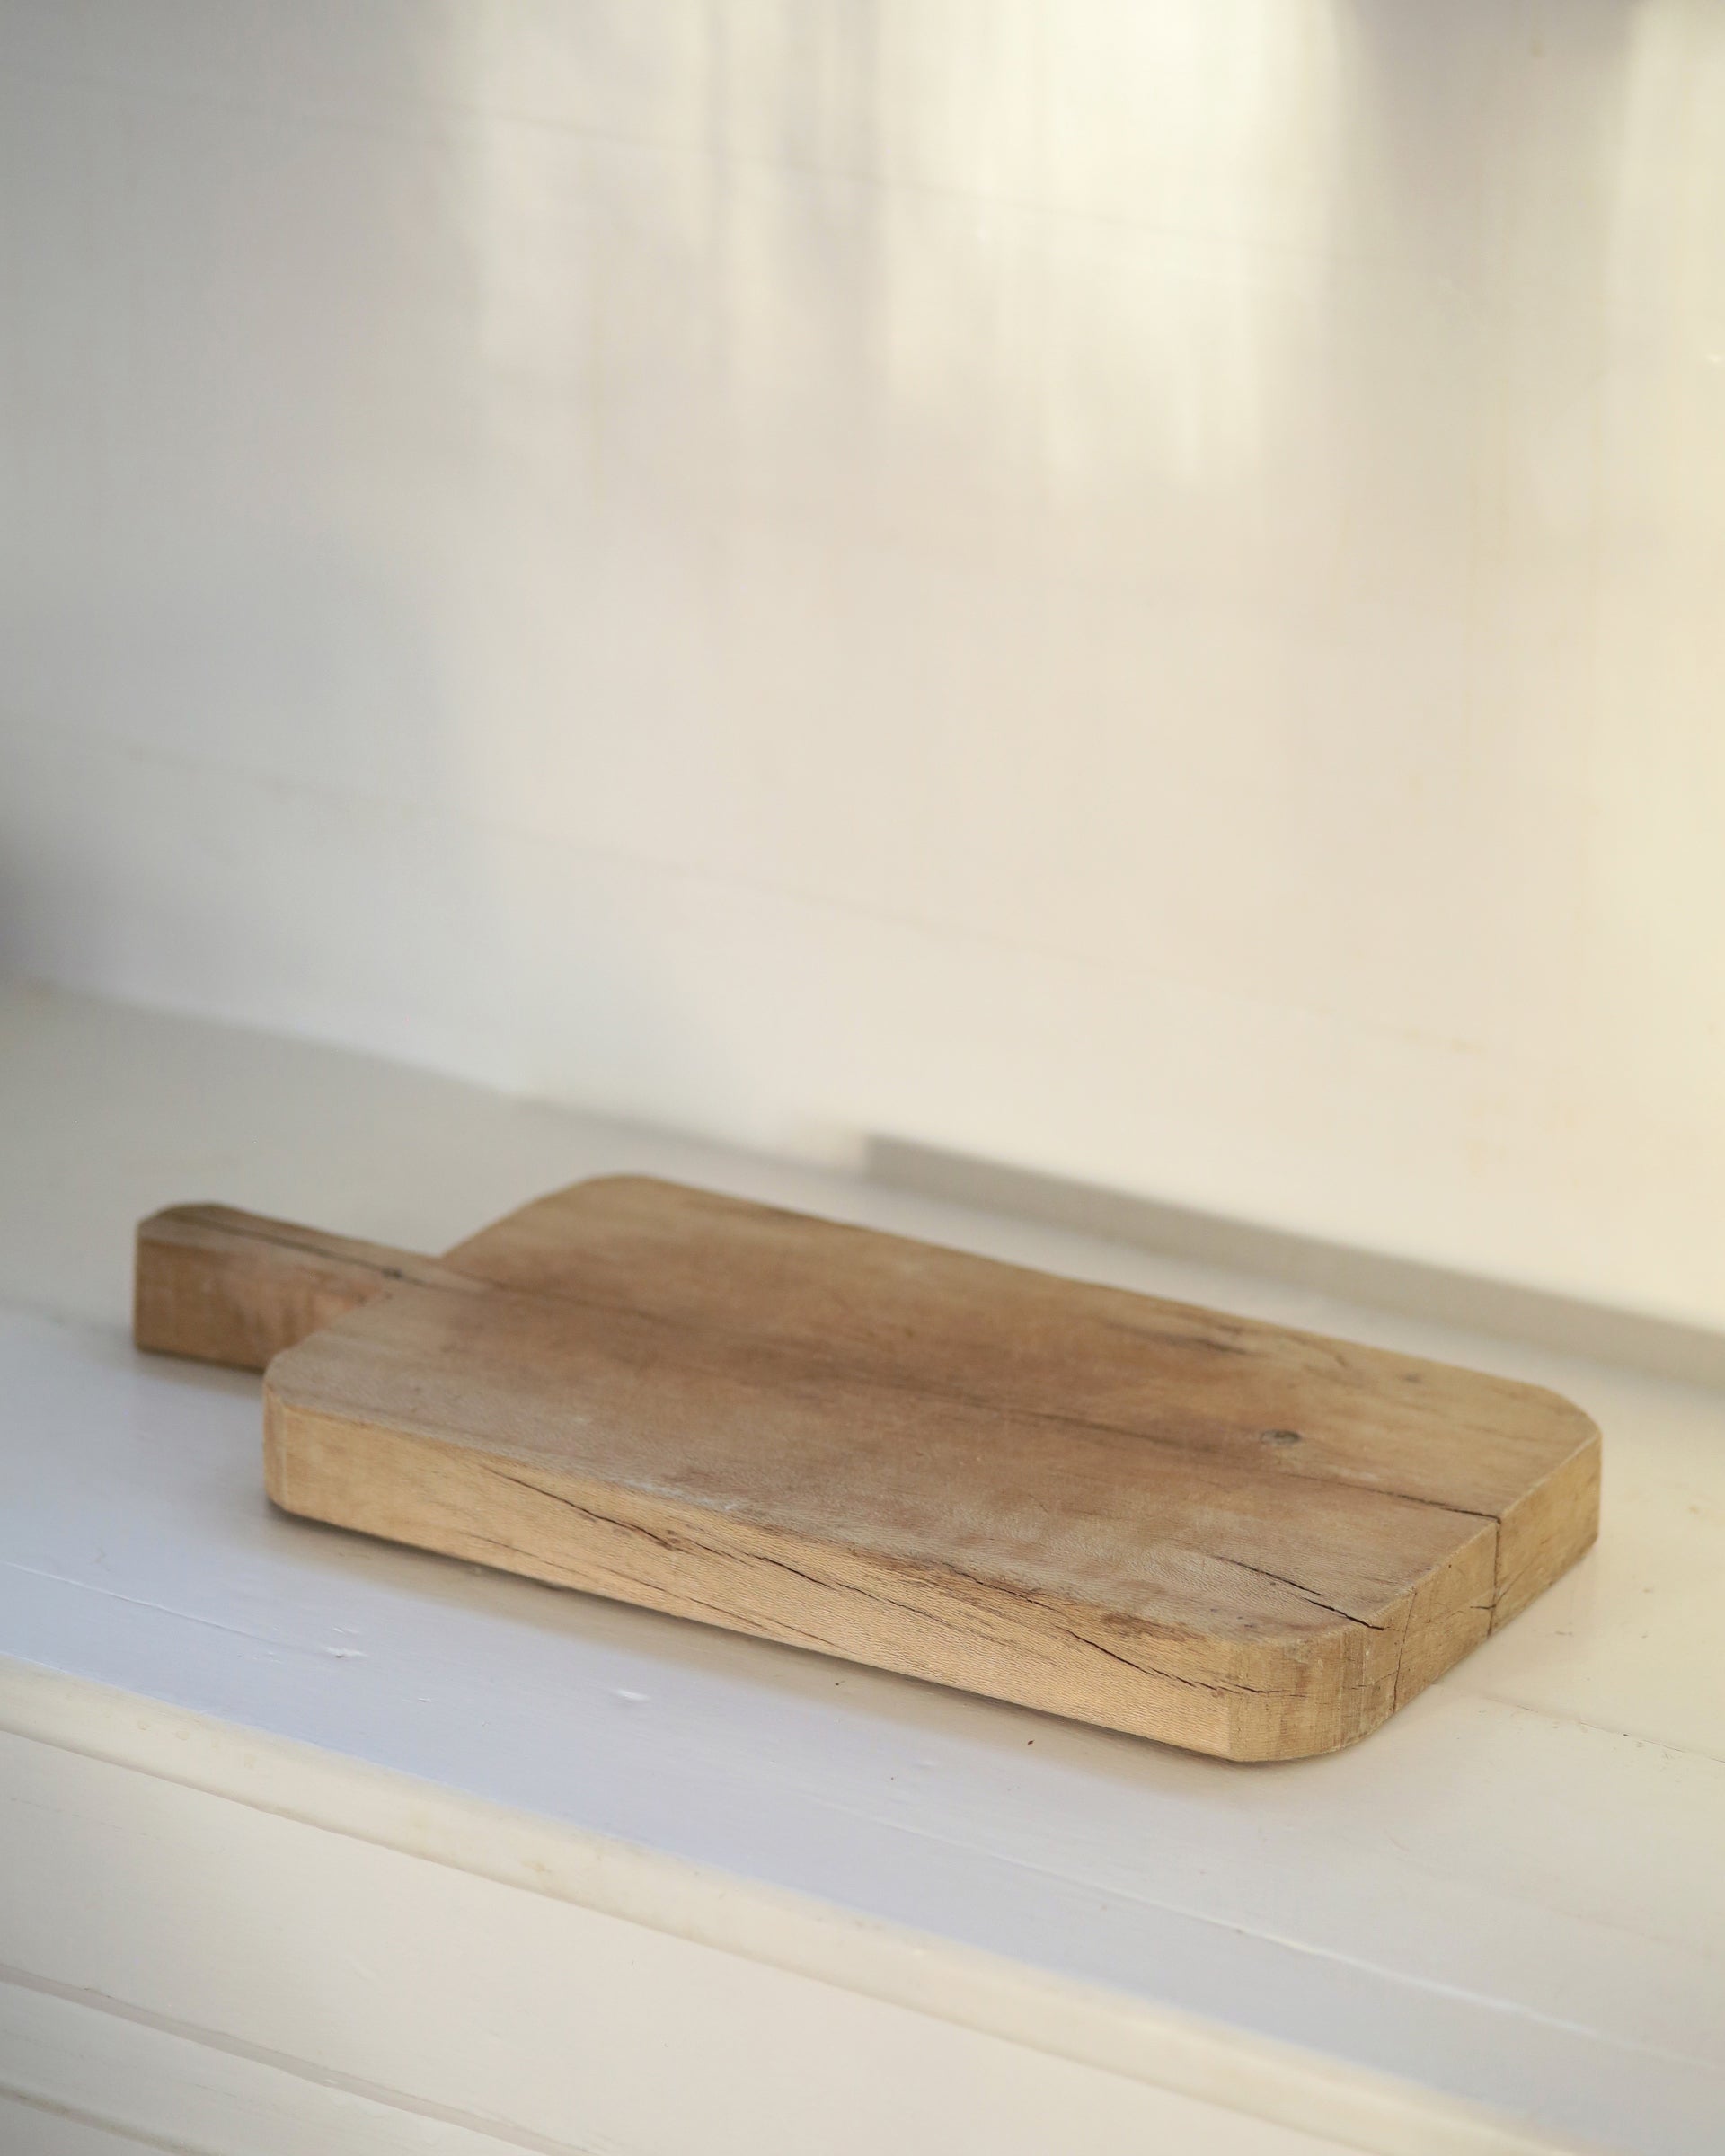 Pale wood antique serving board